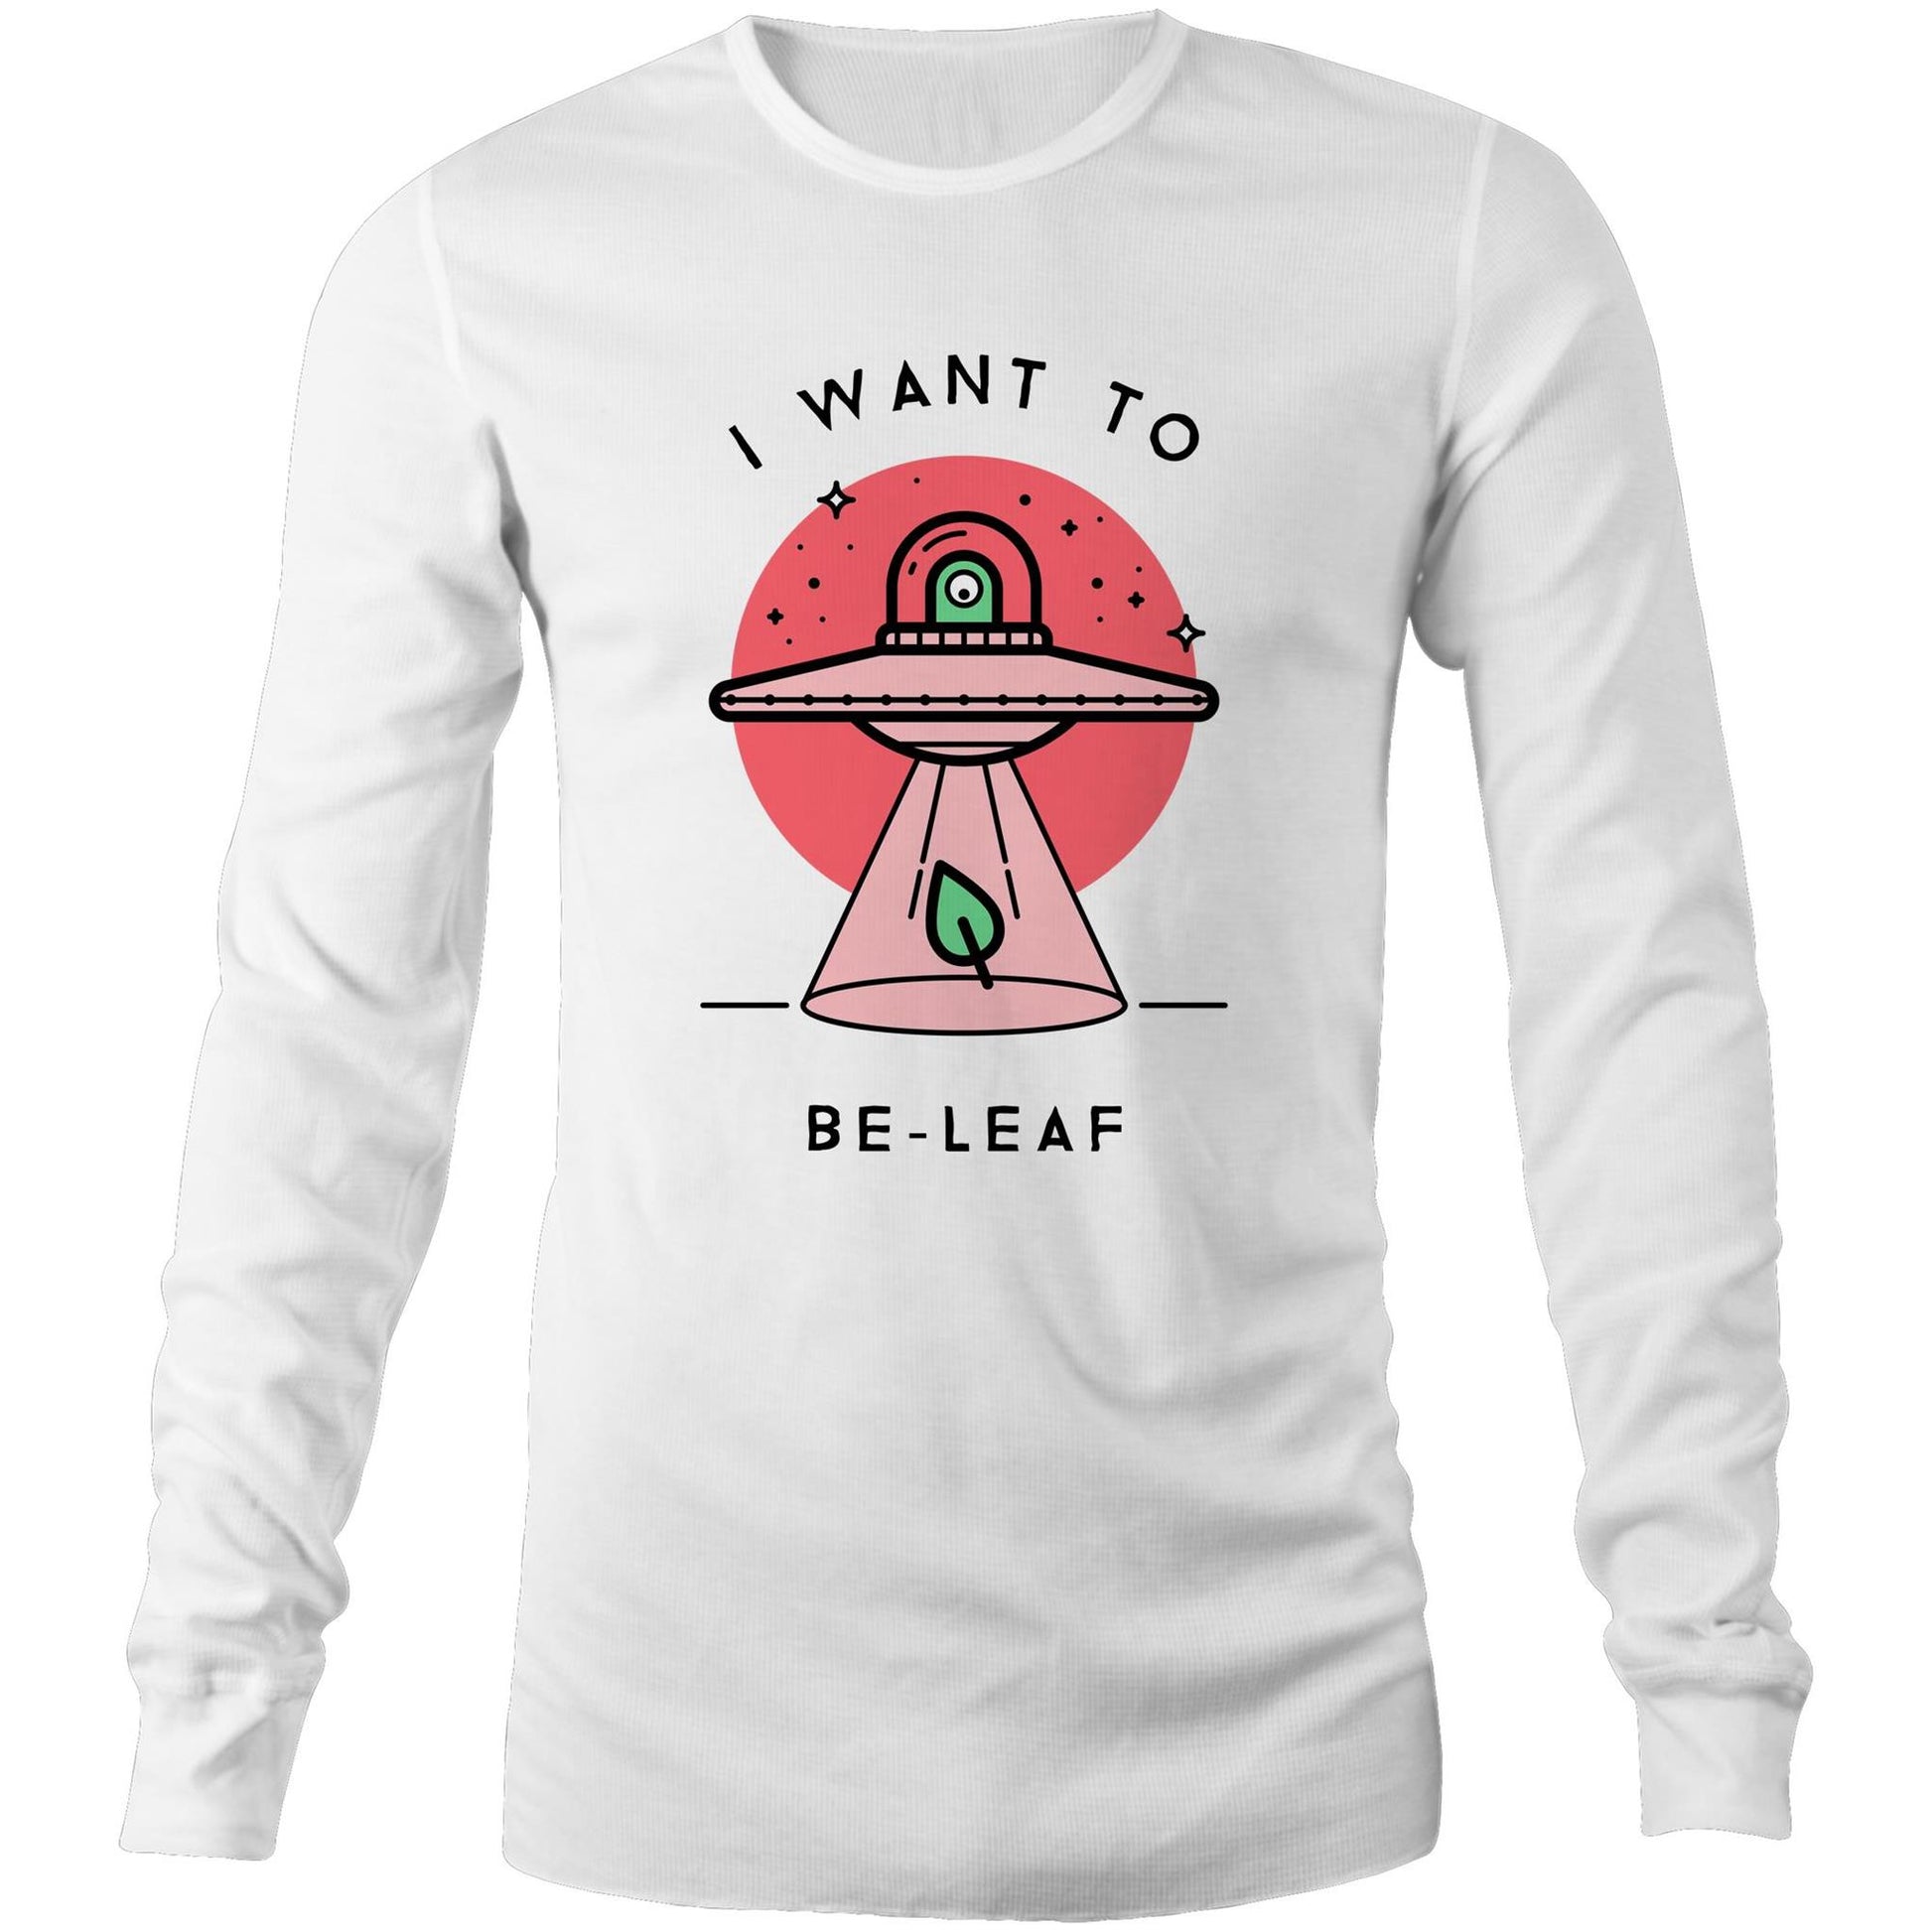 I Want To Be-Leaf, UFO - Mens Long Sleeve T-Shirt White Unisex Long Sleeve T-shirt Sci Fi